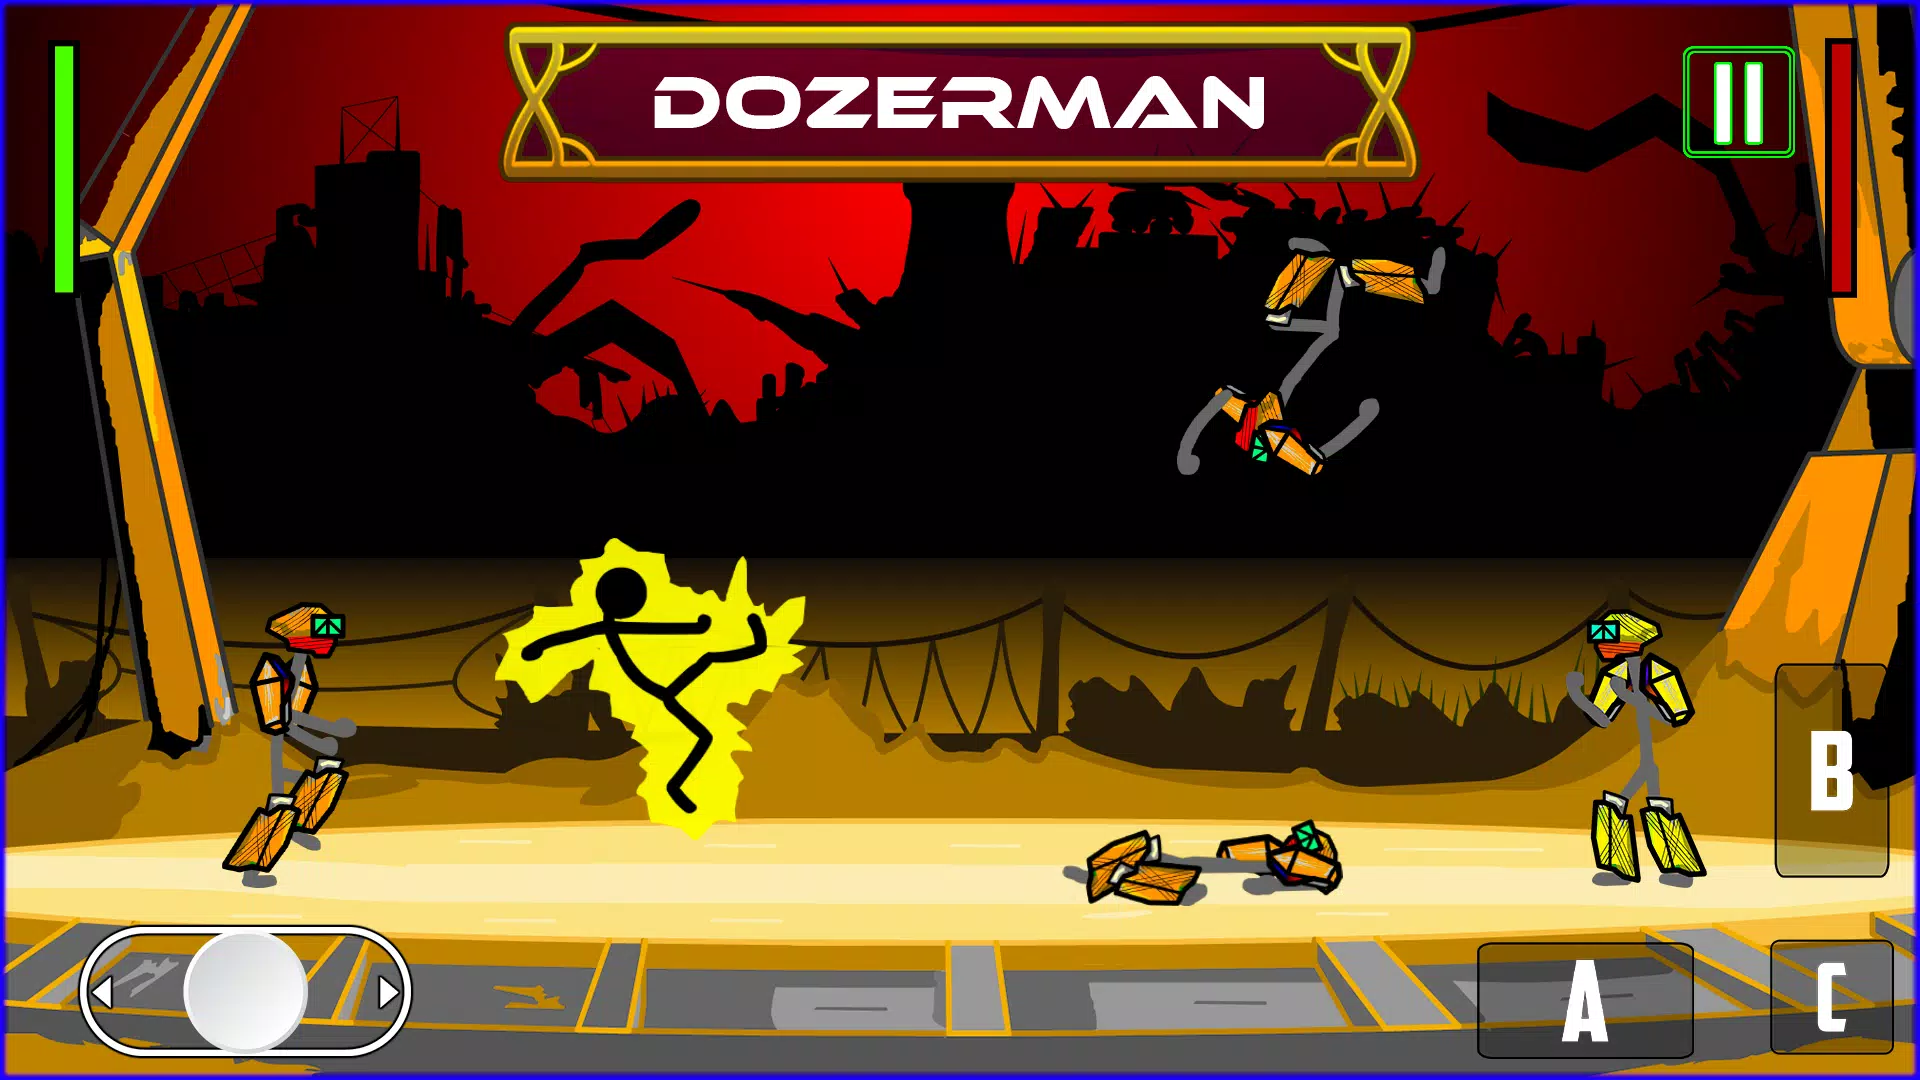 Download do APK de Stick Fight: Stickman Fighting Games para Android